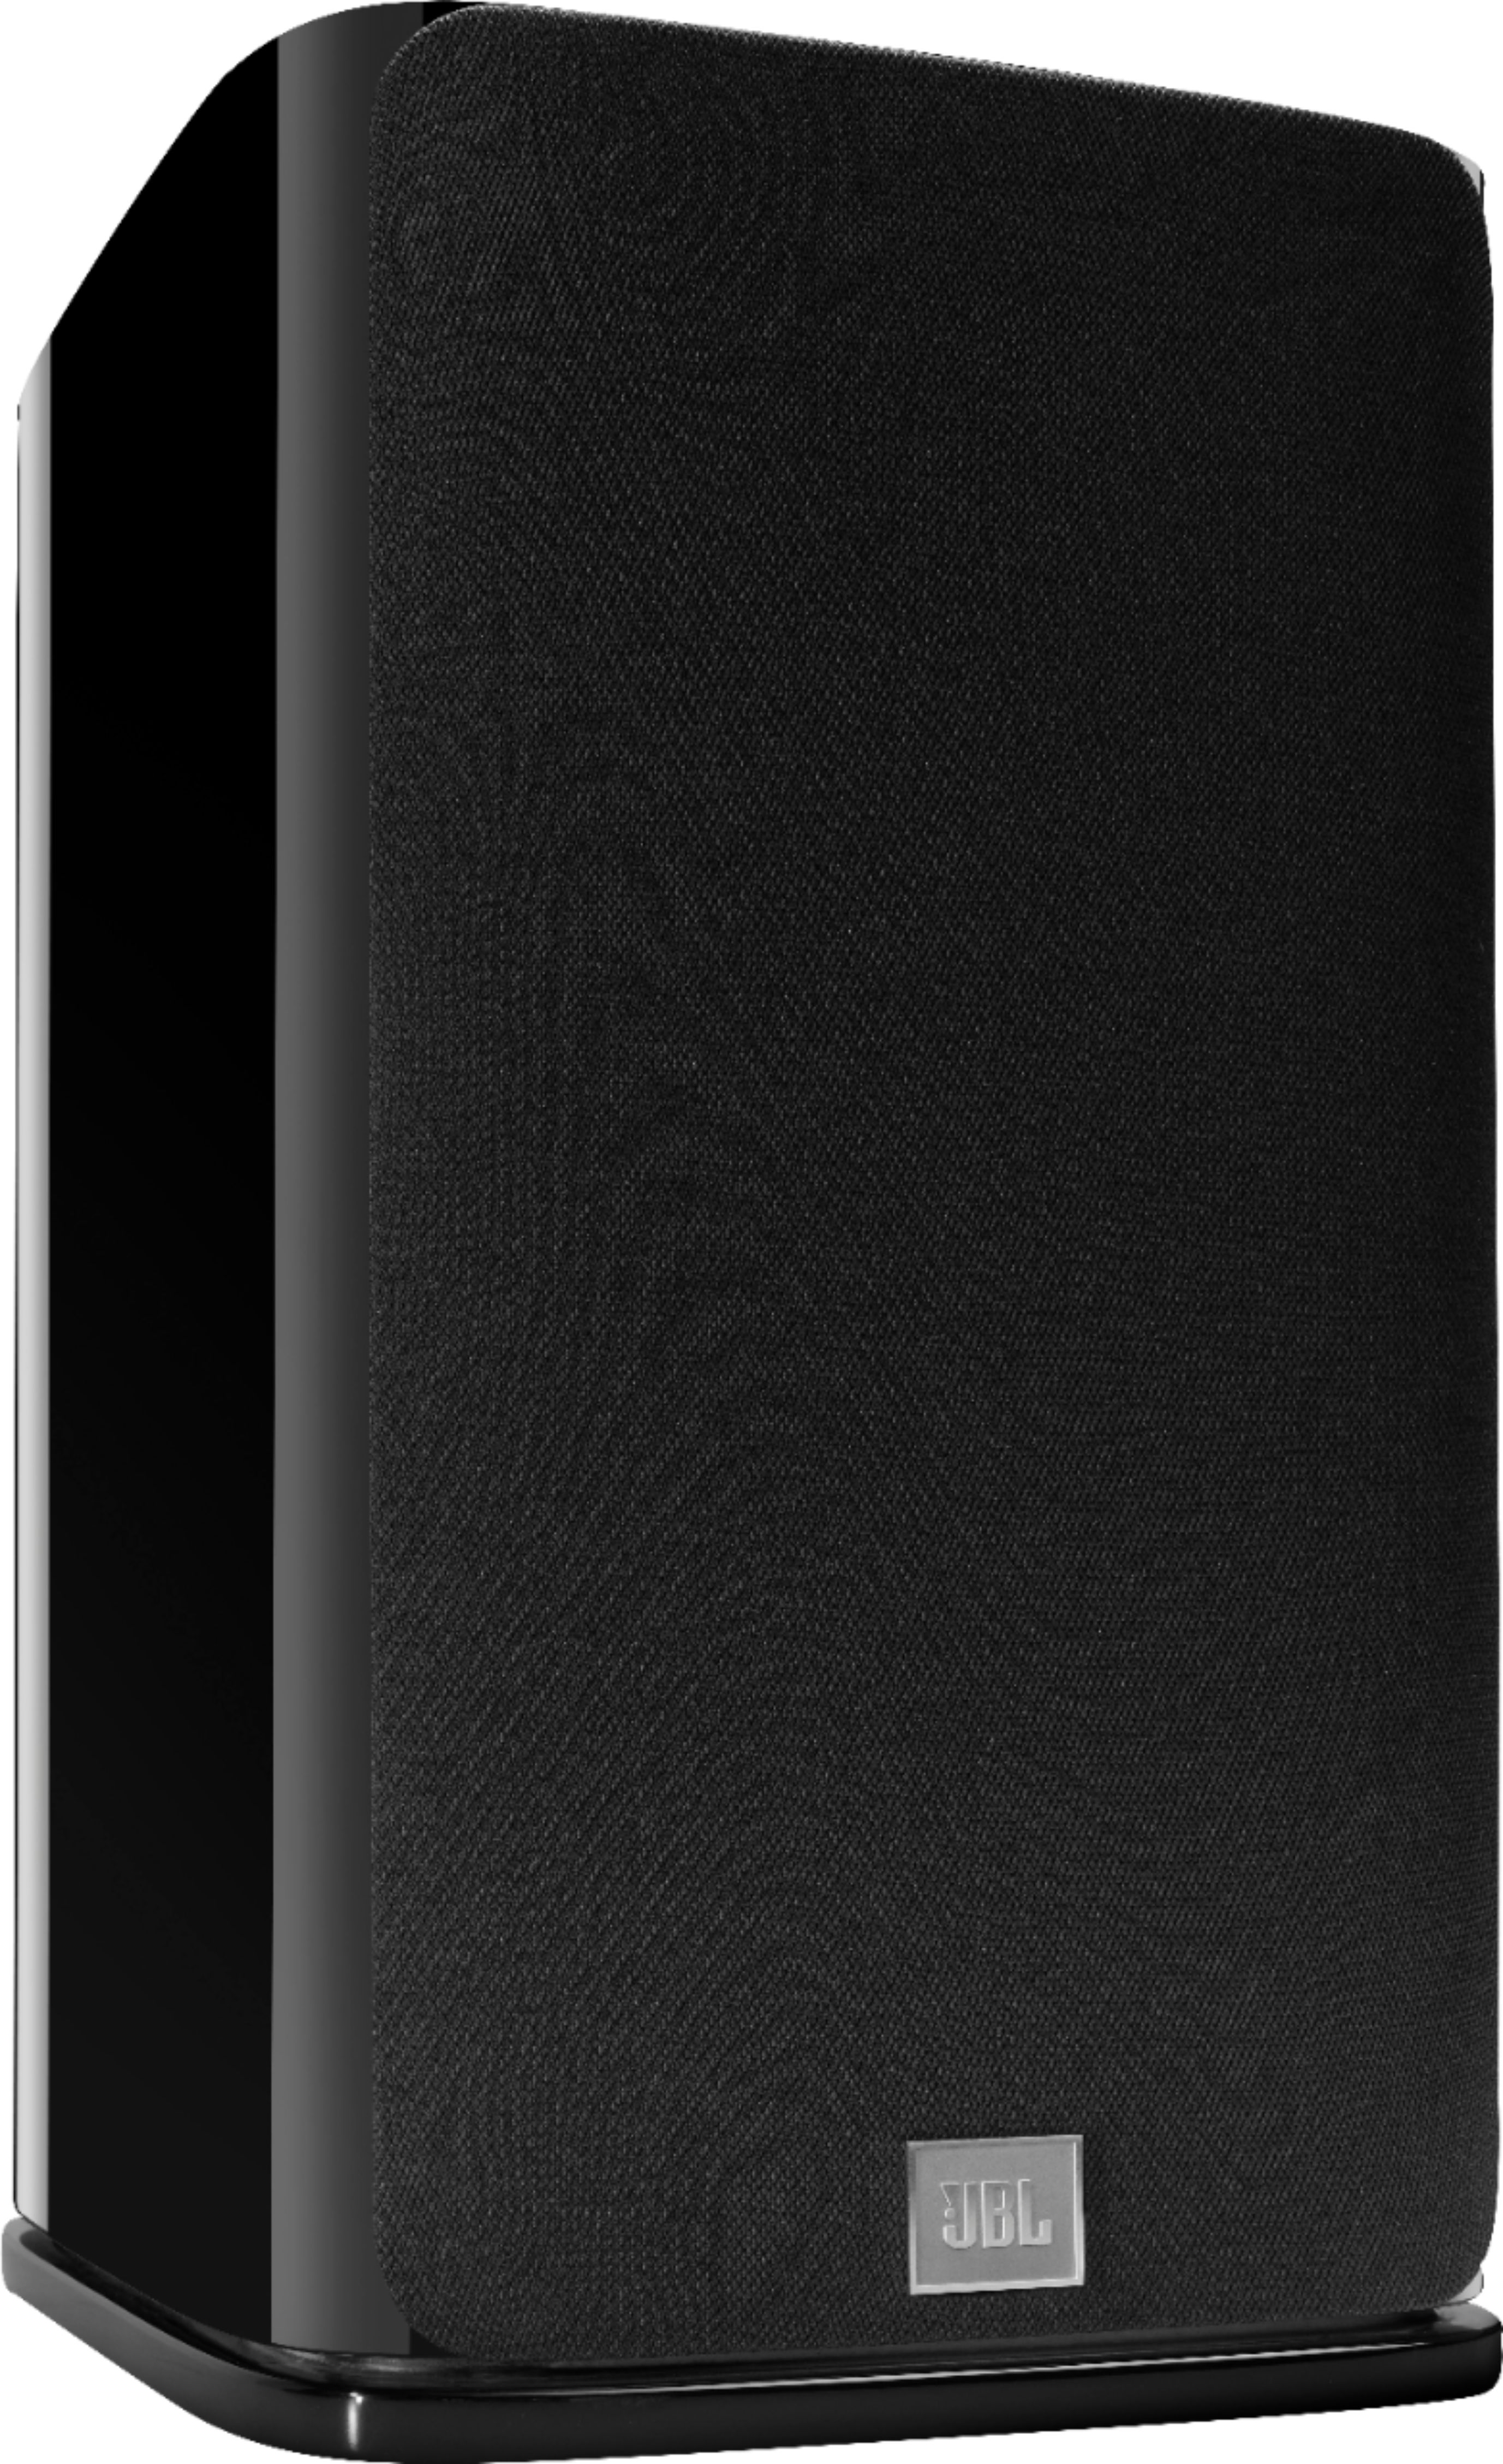 Left View: JBL - HDI1600 6.5" 2-way bookshelf loudspeaker with 1" compression tweeter, each - Gloss Black Finish